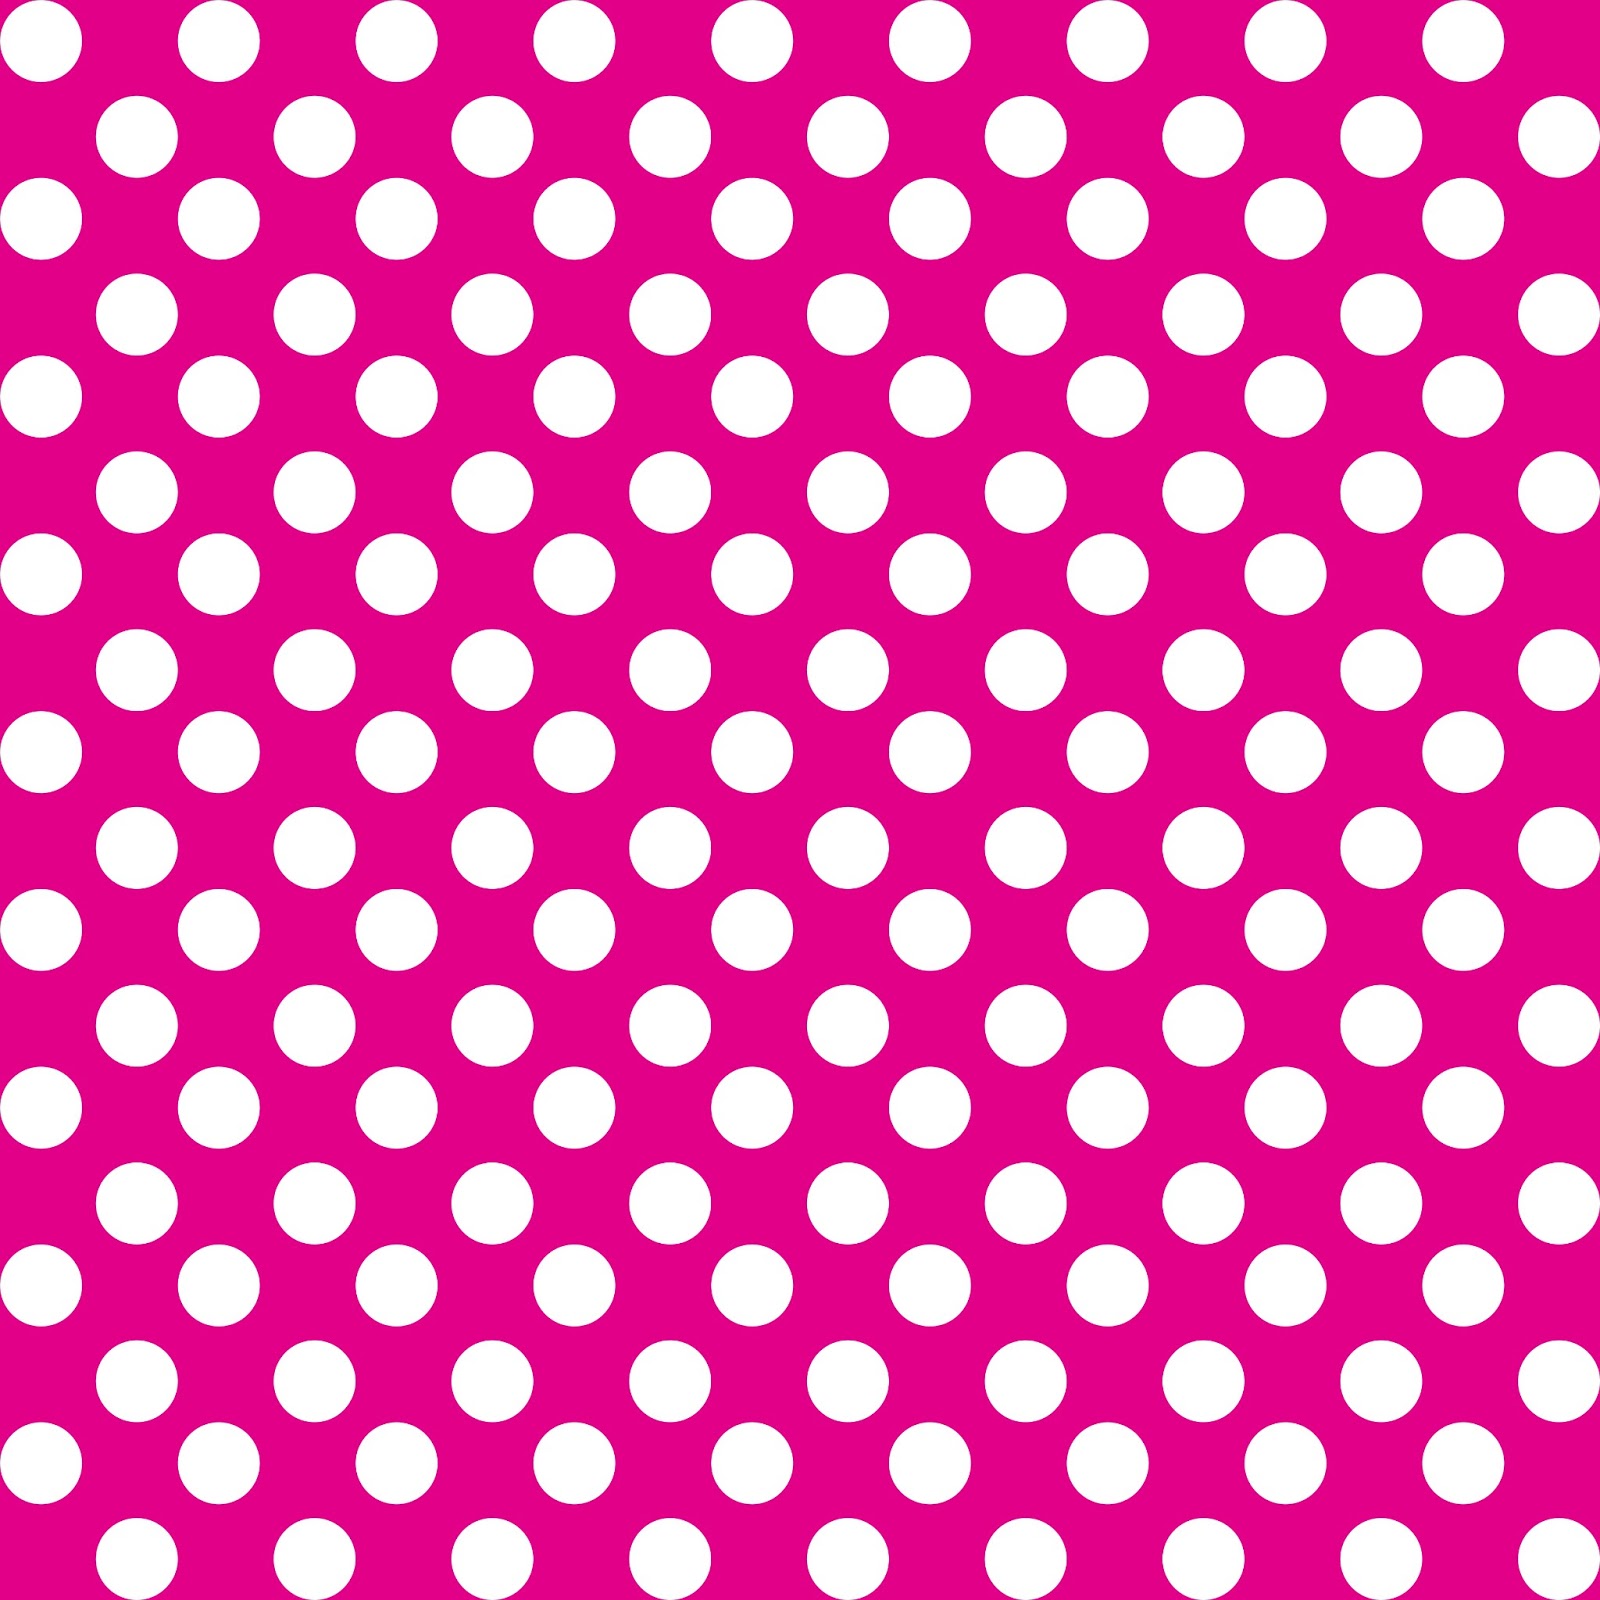 polka dots clip art - Clip Art Library.